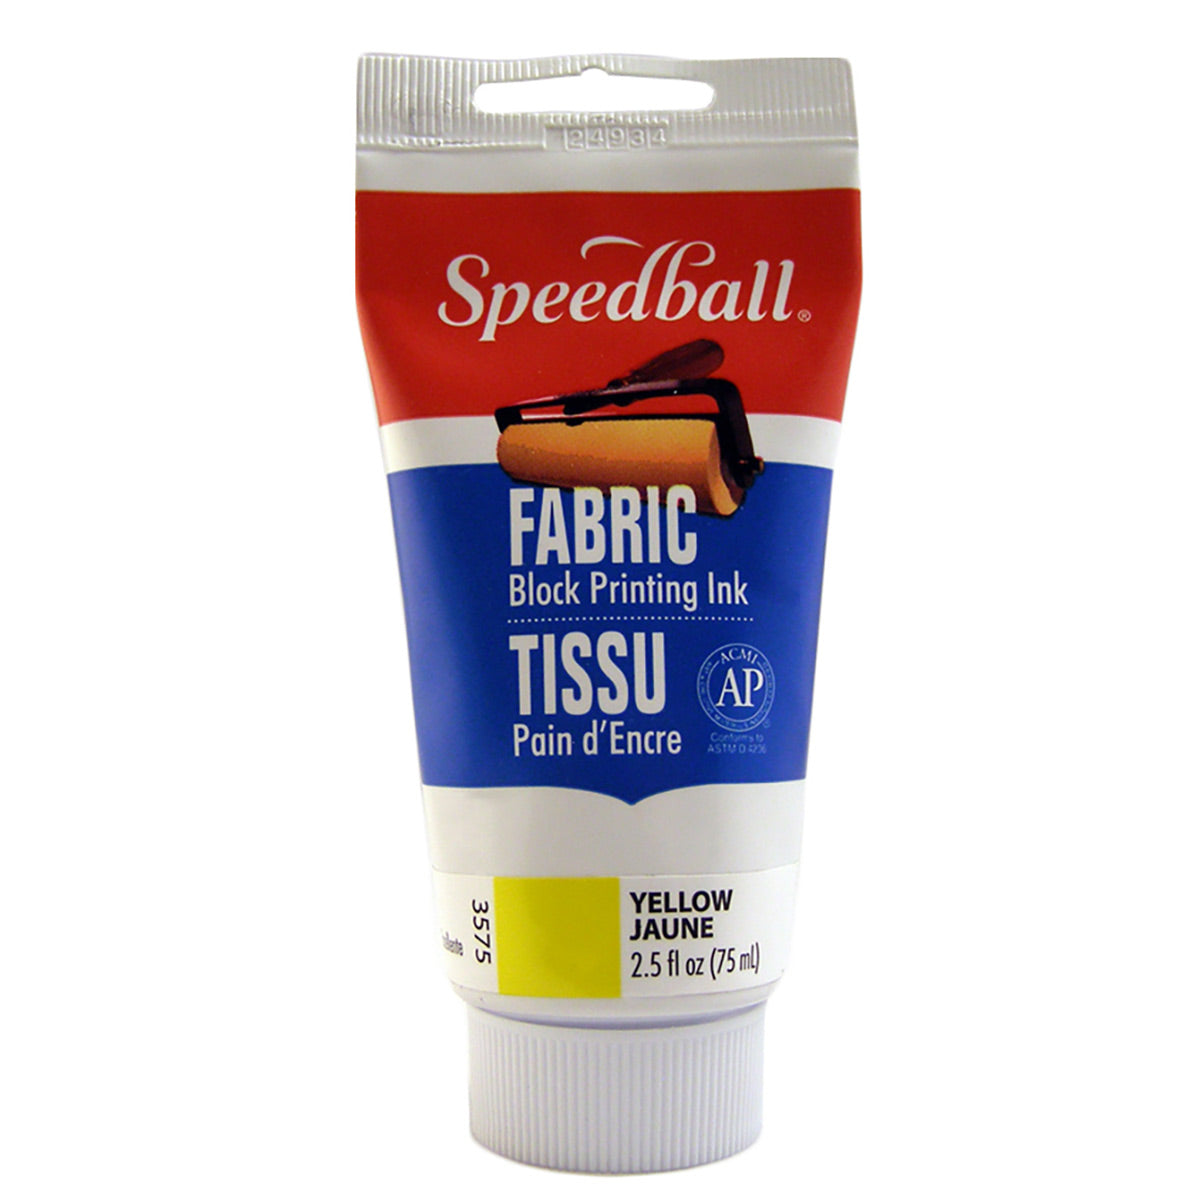 Speedball - Fabric Block Printing Ink 75ml (2.5oz) - Yellow